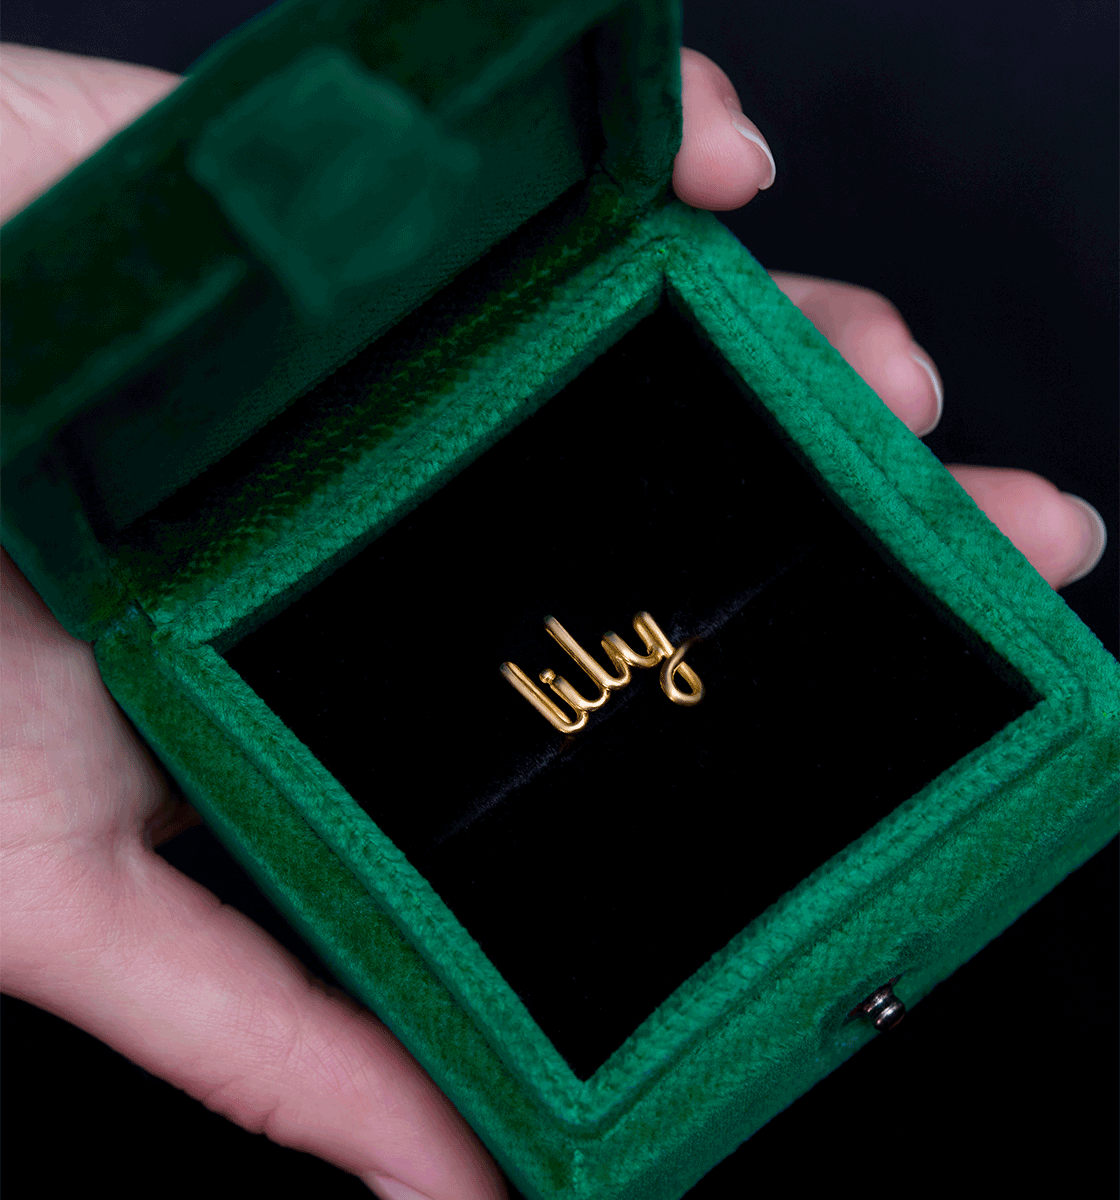 Bespoke written ring in box by Solange Azagury-Partridge